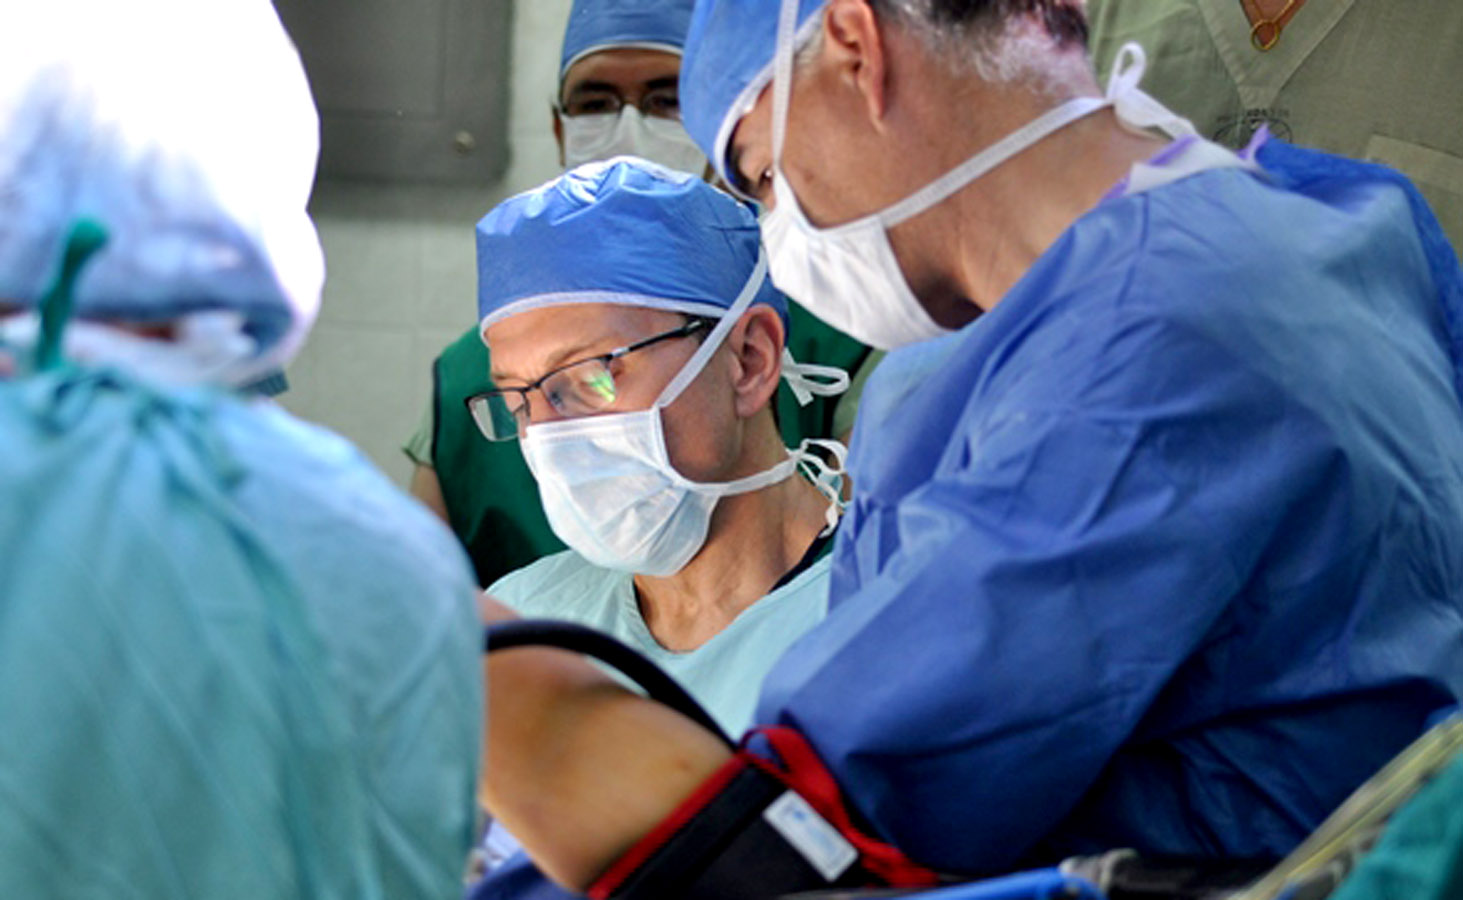 Drs. Novacheck (center), de la Maza (right) and Wolff (above) in the operating room at Hospital Vozandes-Quito.